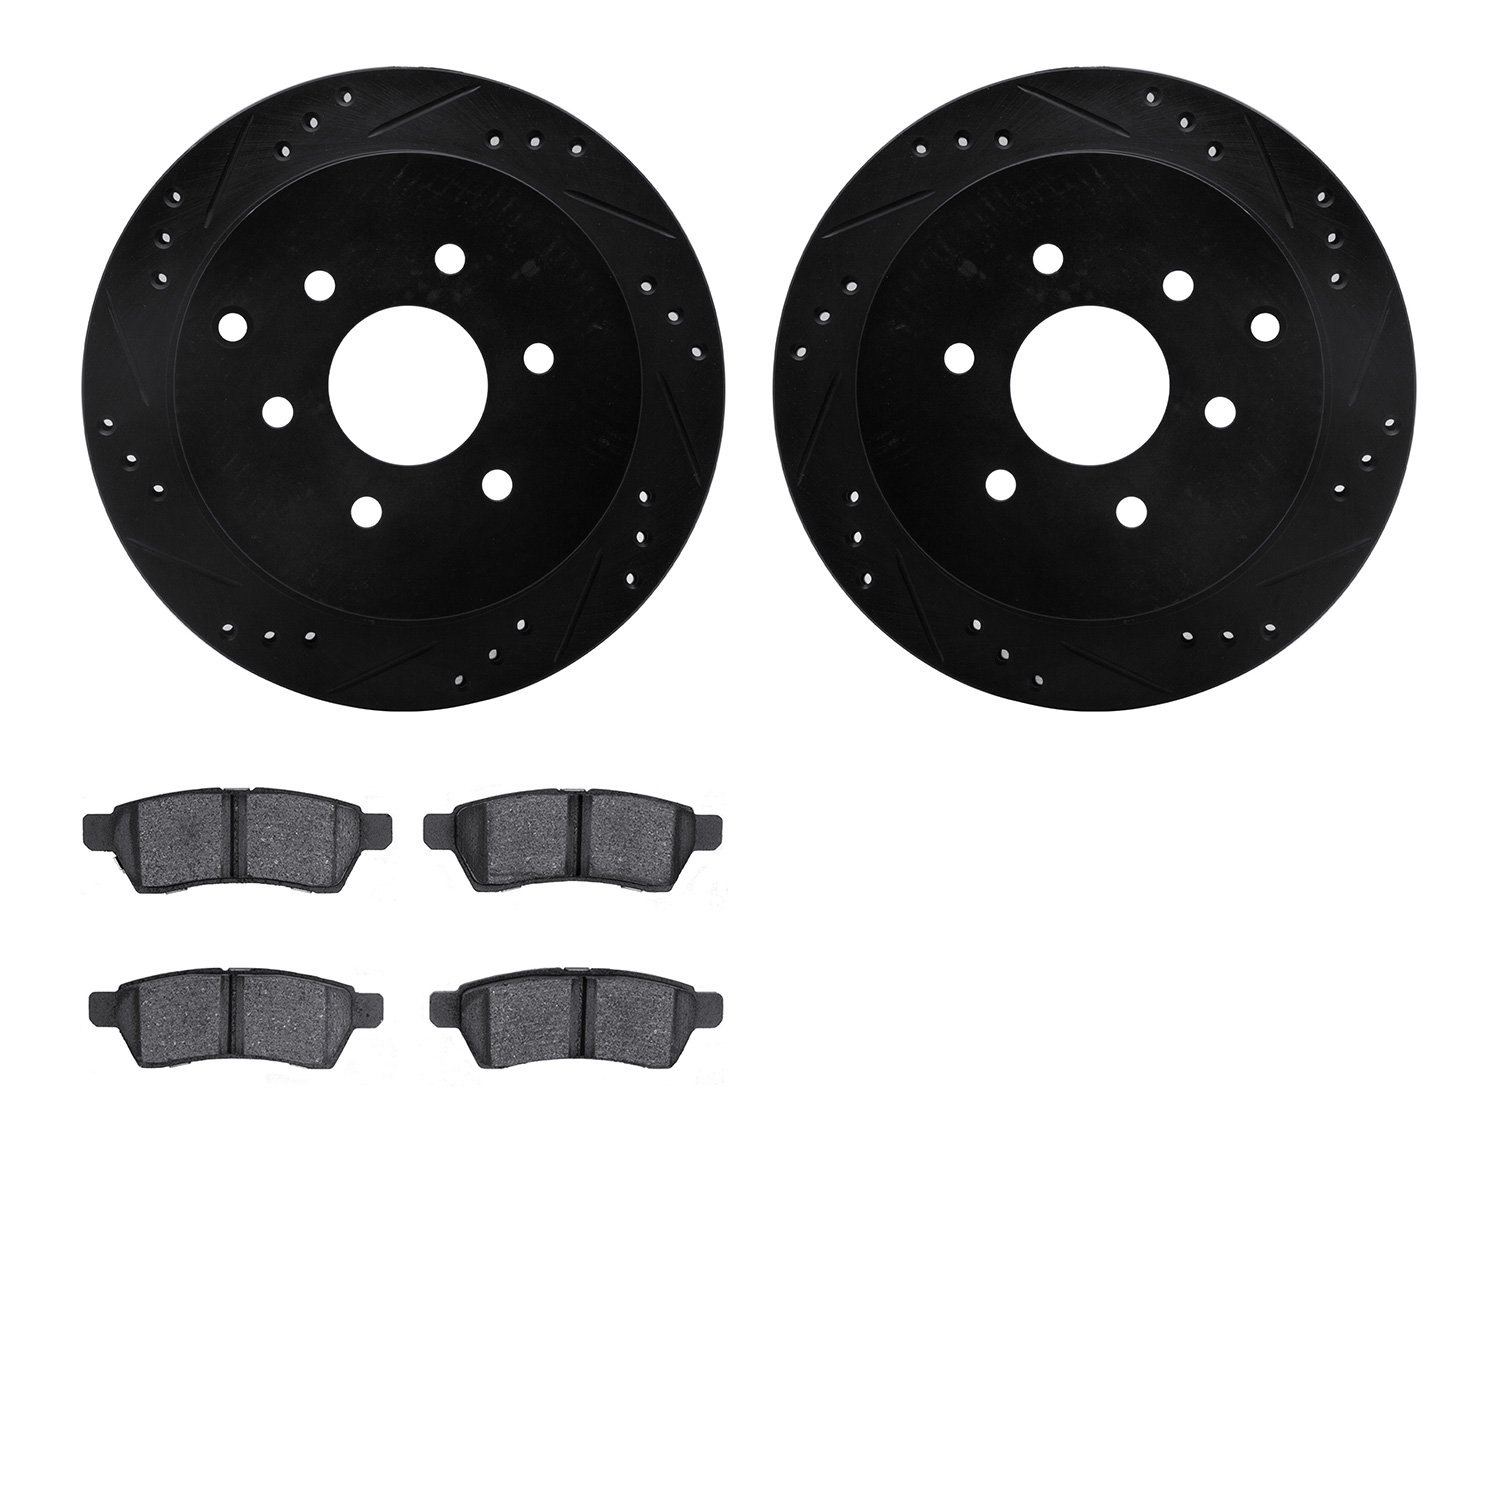 8302-67110 Drilled/Slotted Brake Rotors with 3000-Series Ceramic Brake Pads Kit [Black], Fits Select Multiple Makes/Models, Posi